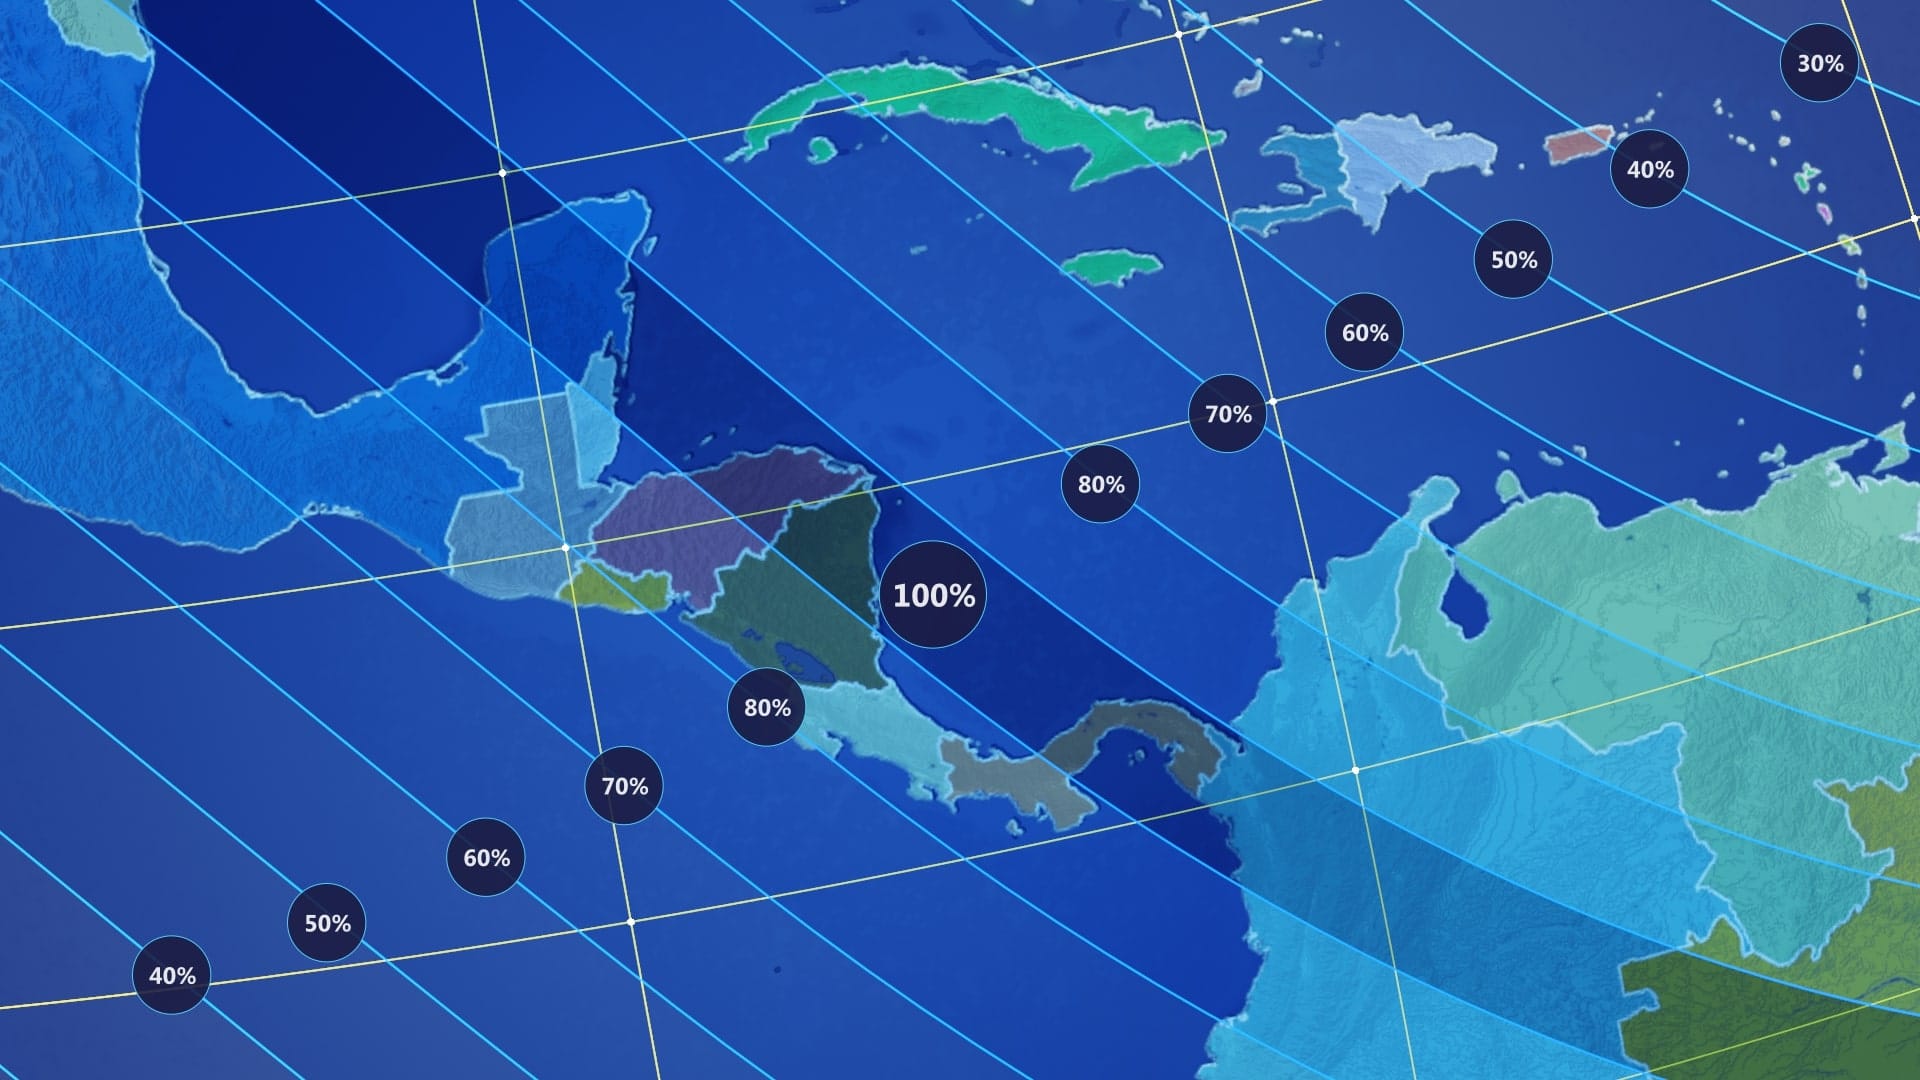 Annular solar eclipse path over Central America